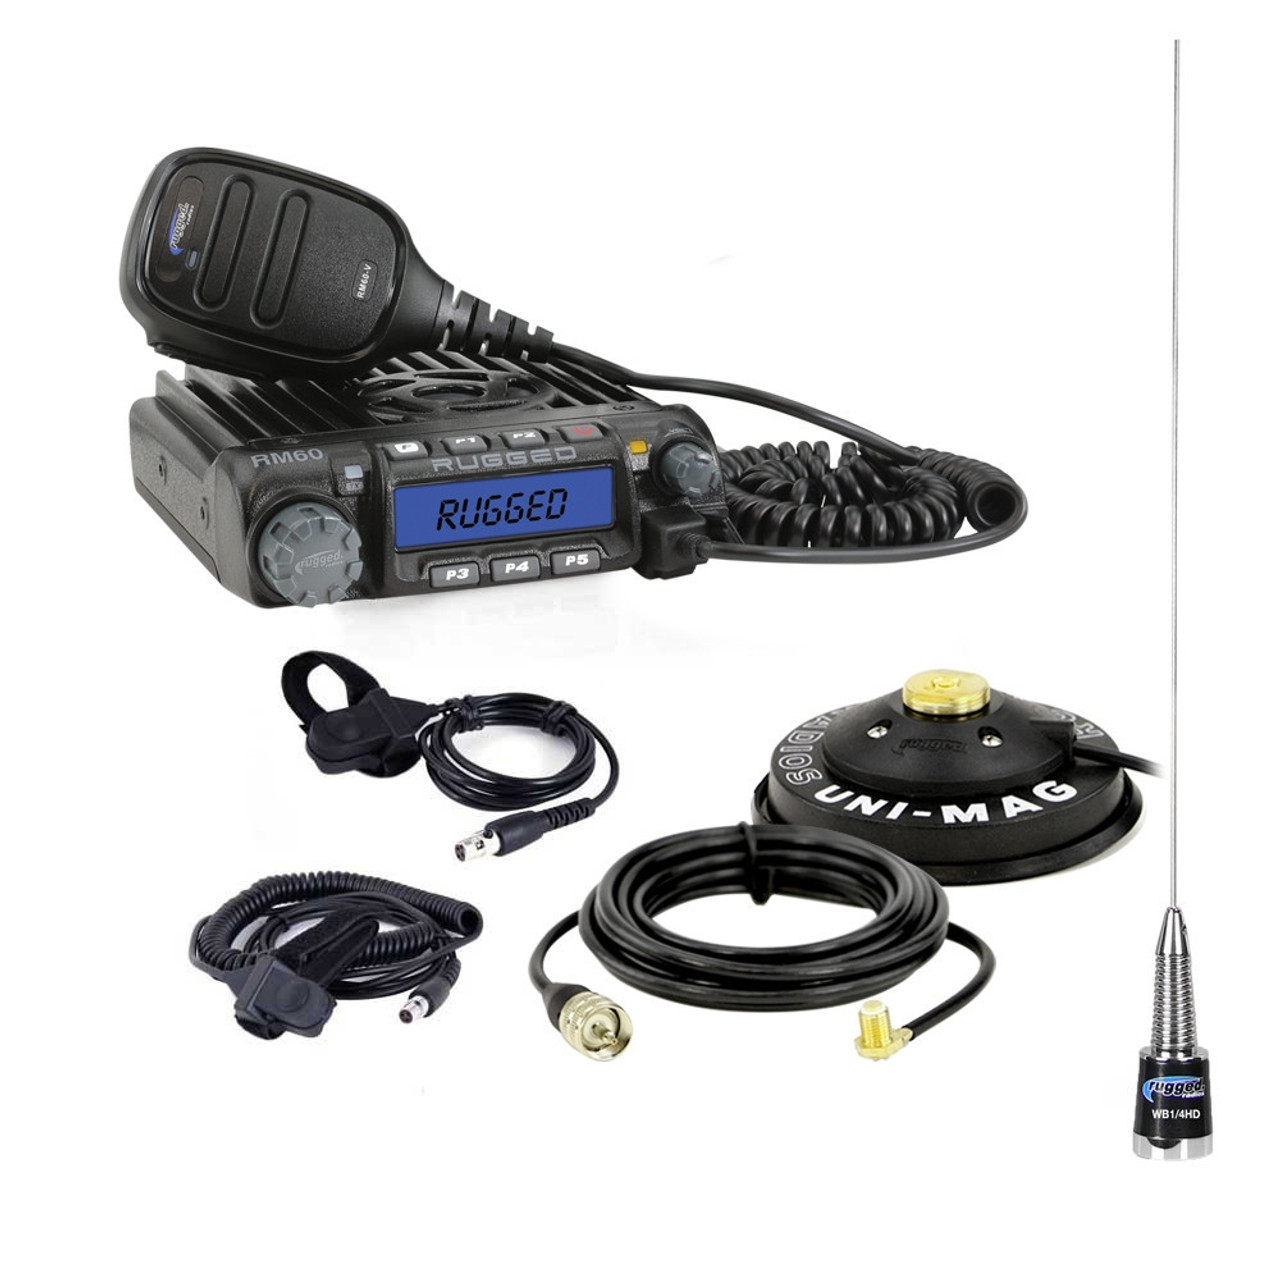 Rugged Radios UNI-MAG Universal NMO or Magnetic Antenna Mount